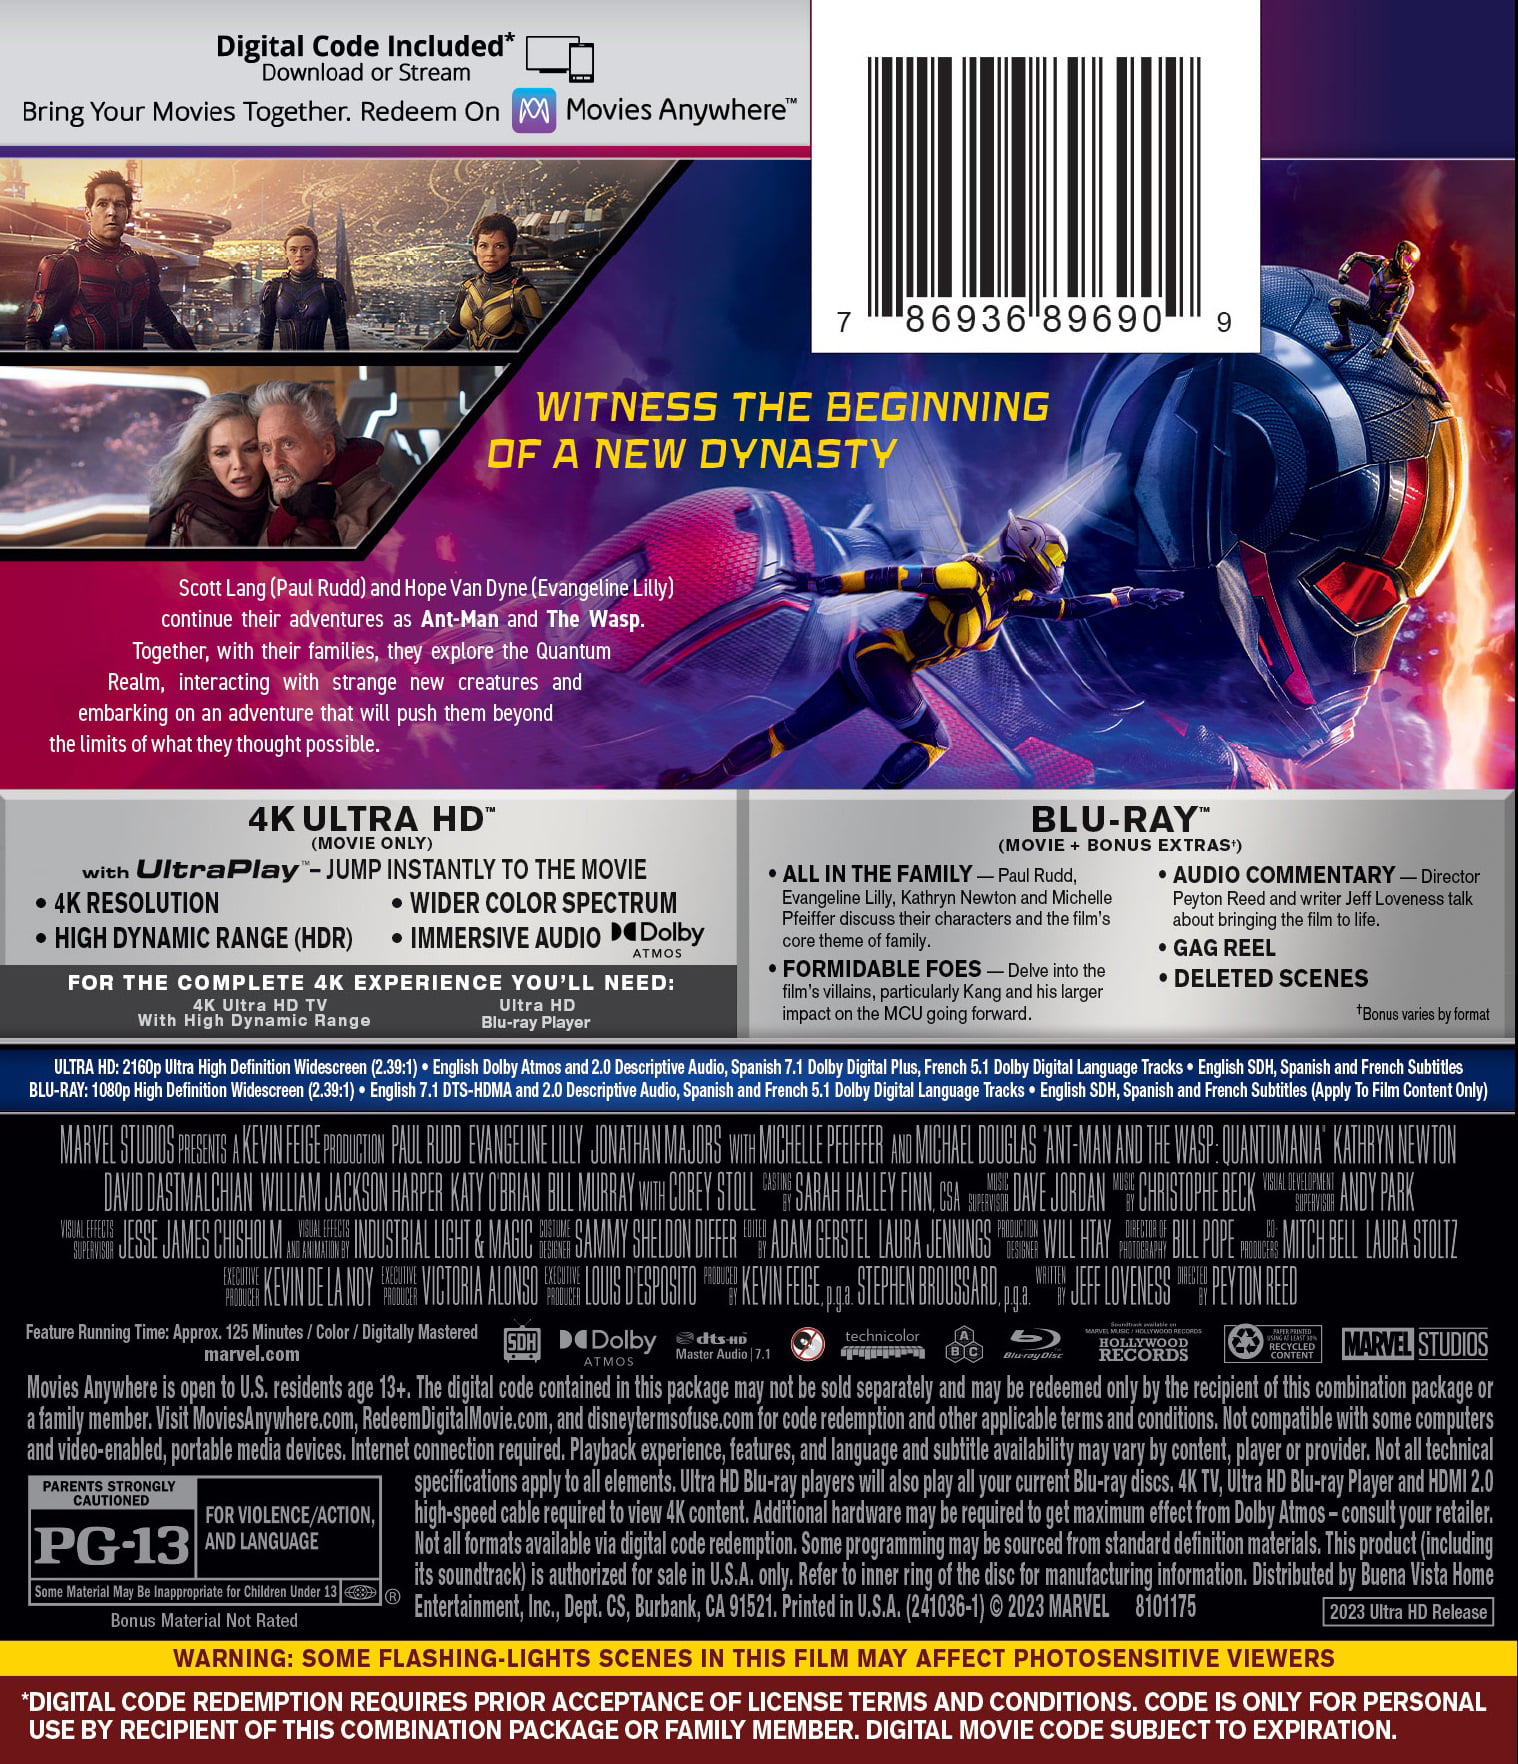 Ant-Man and the Wasp: Quantumania (Walmart Exclusive W/ Enamel Pin) (4K UHD  + Blu-ray + Digital Code) 